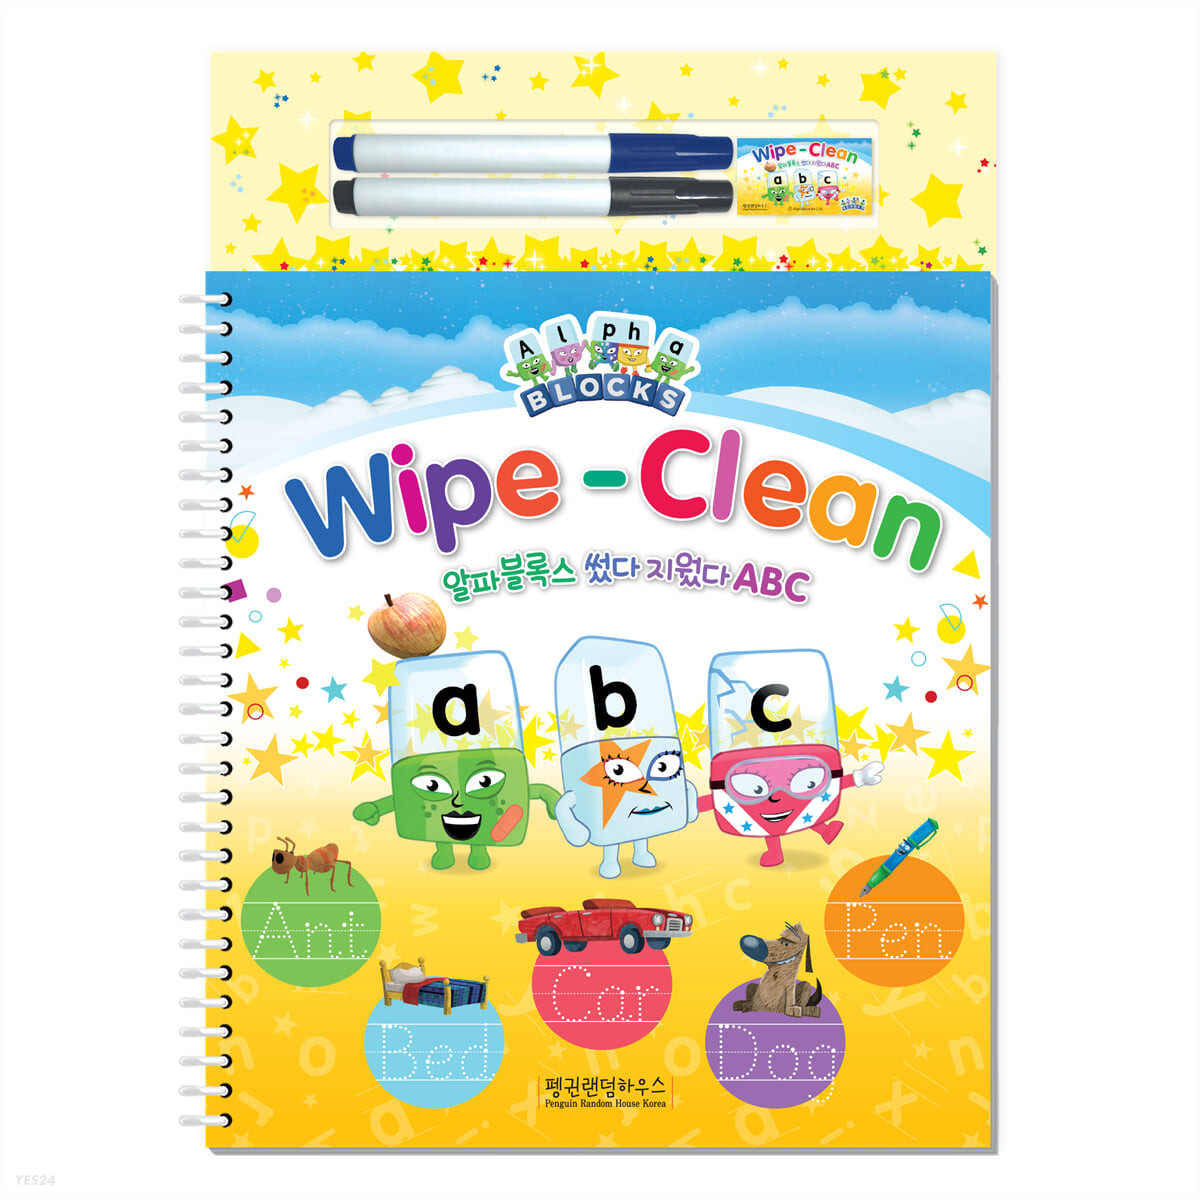 Wipe-Clean : 알파블럭스 썼다 지웠다 ABC